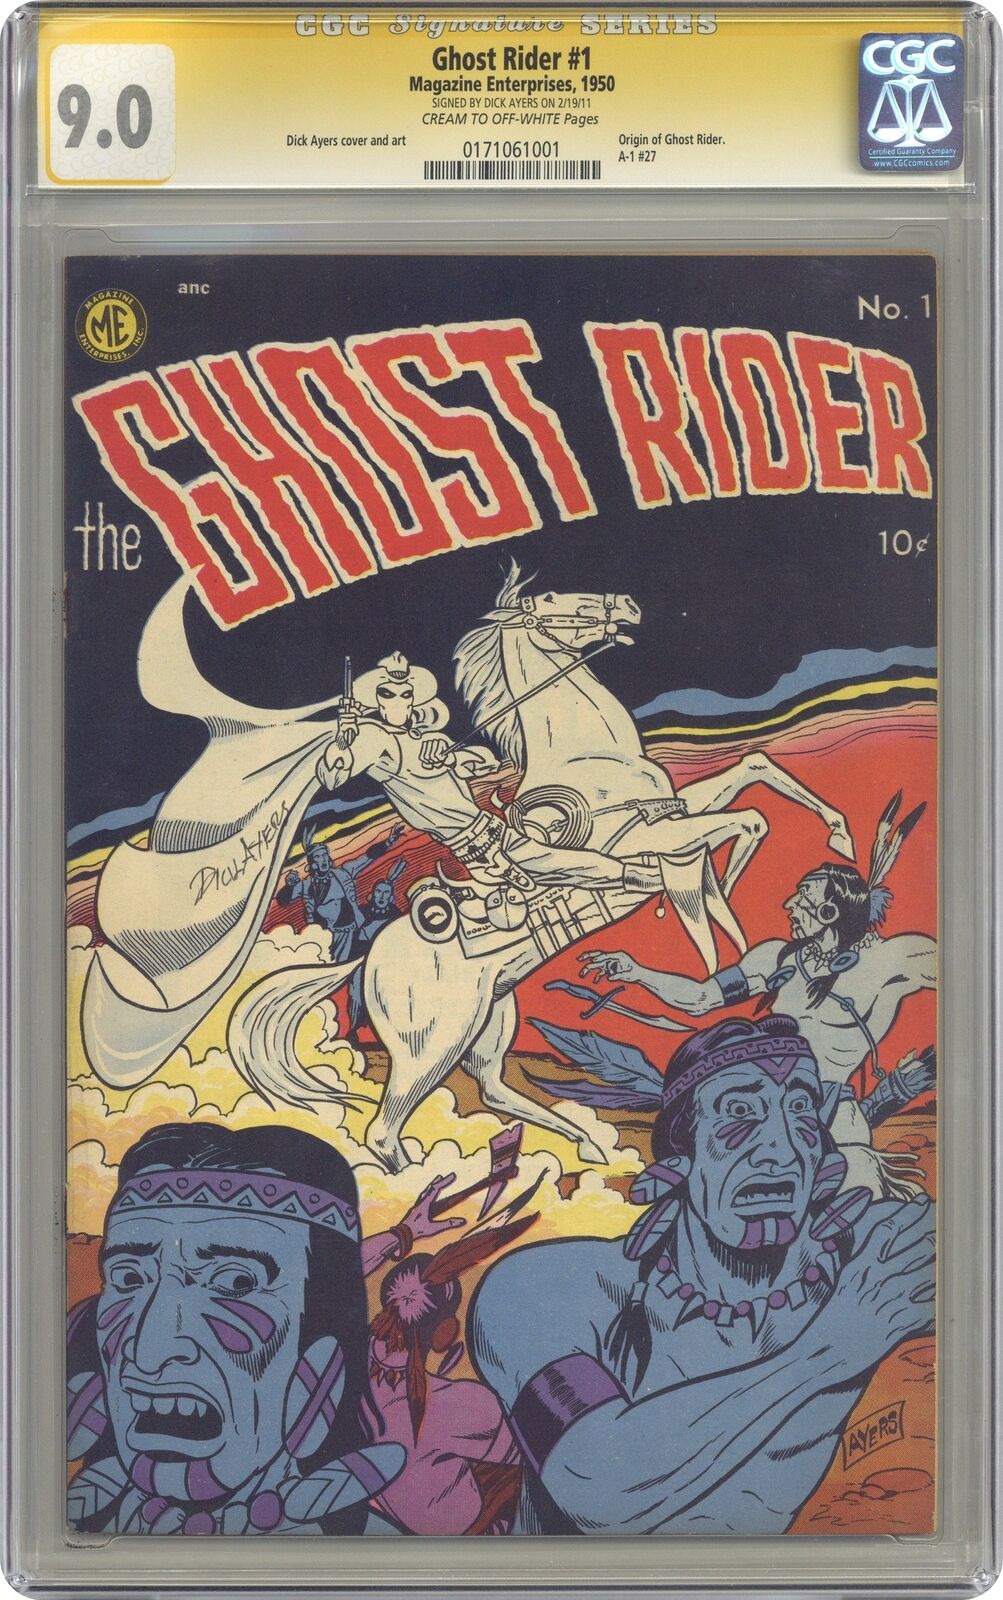 Ghost Rider #1 CGC 9.0 SS Ayers 1950 0171061001